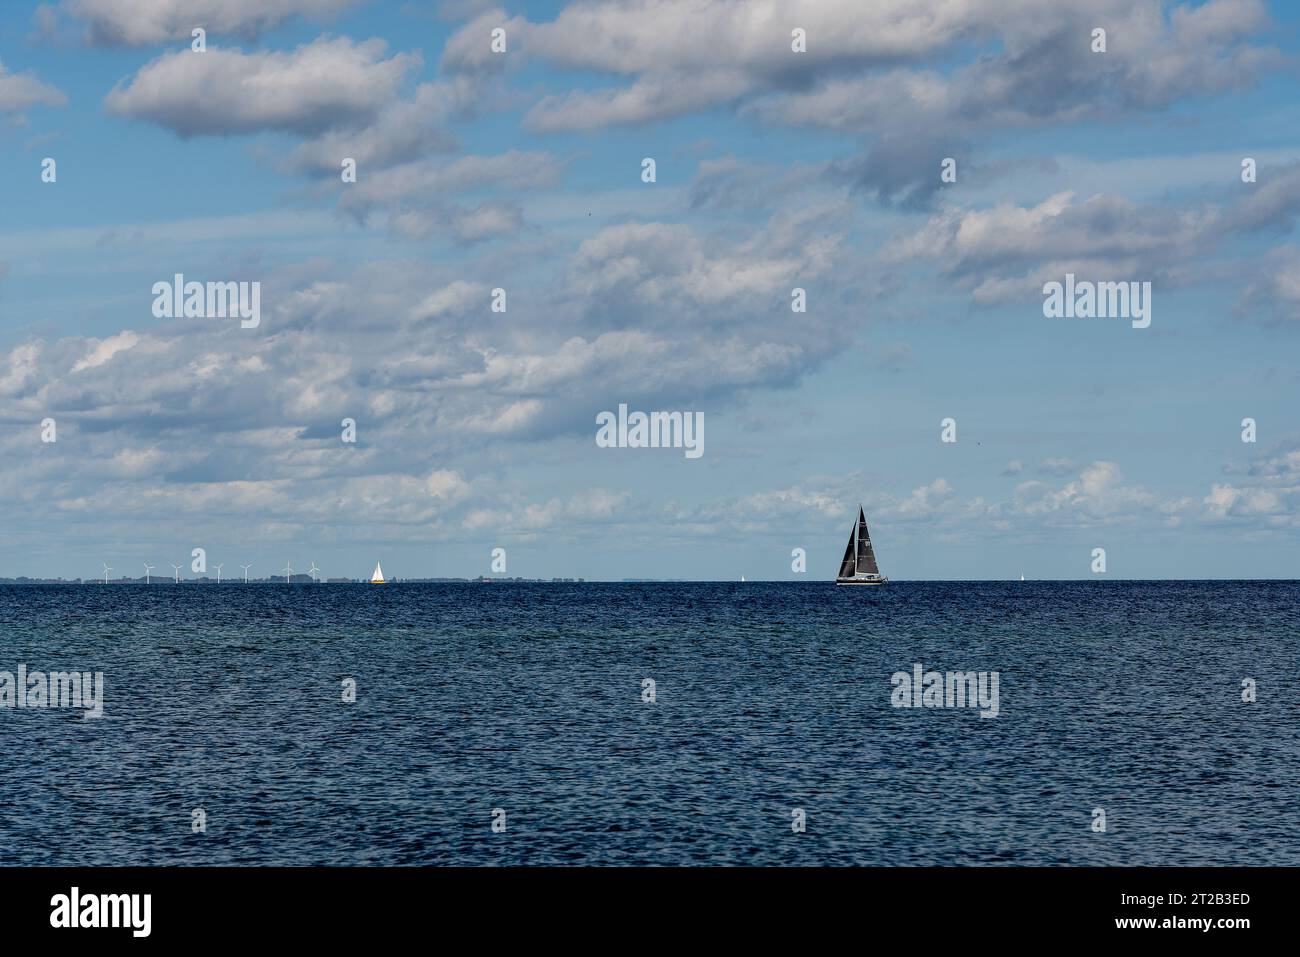 Sailing ship on the Baltic Sea, Germany. Stock Photo